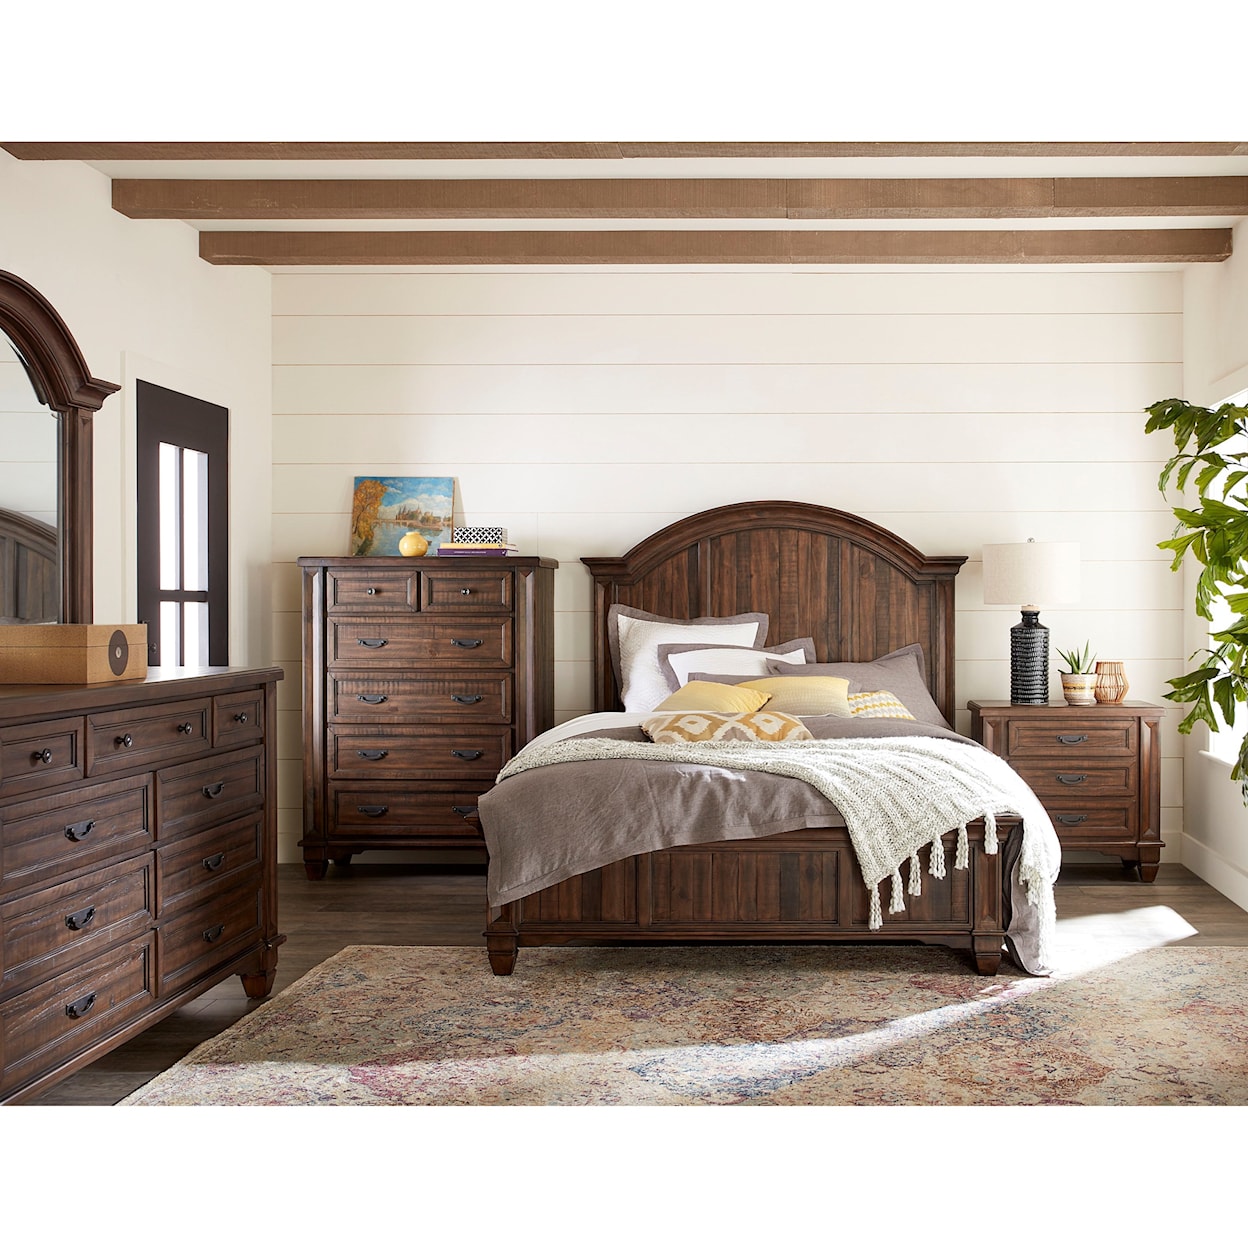 Modus International Colston California King Bedroom Group